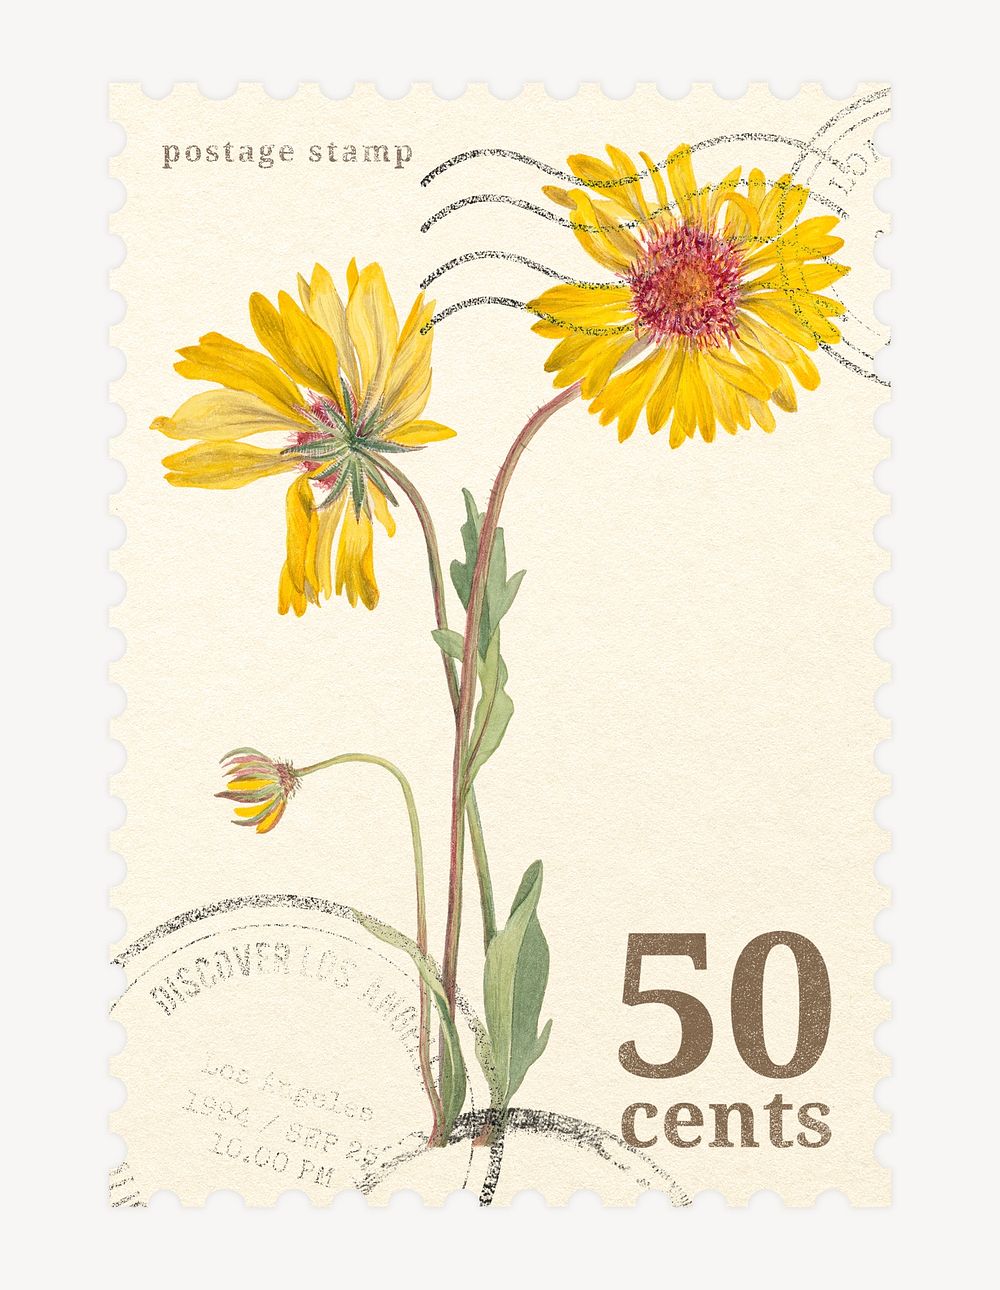 Aesthetic floral postage stamp, blanket flower collage element psd